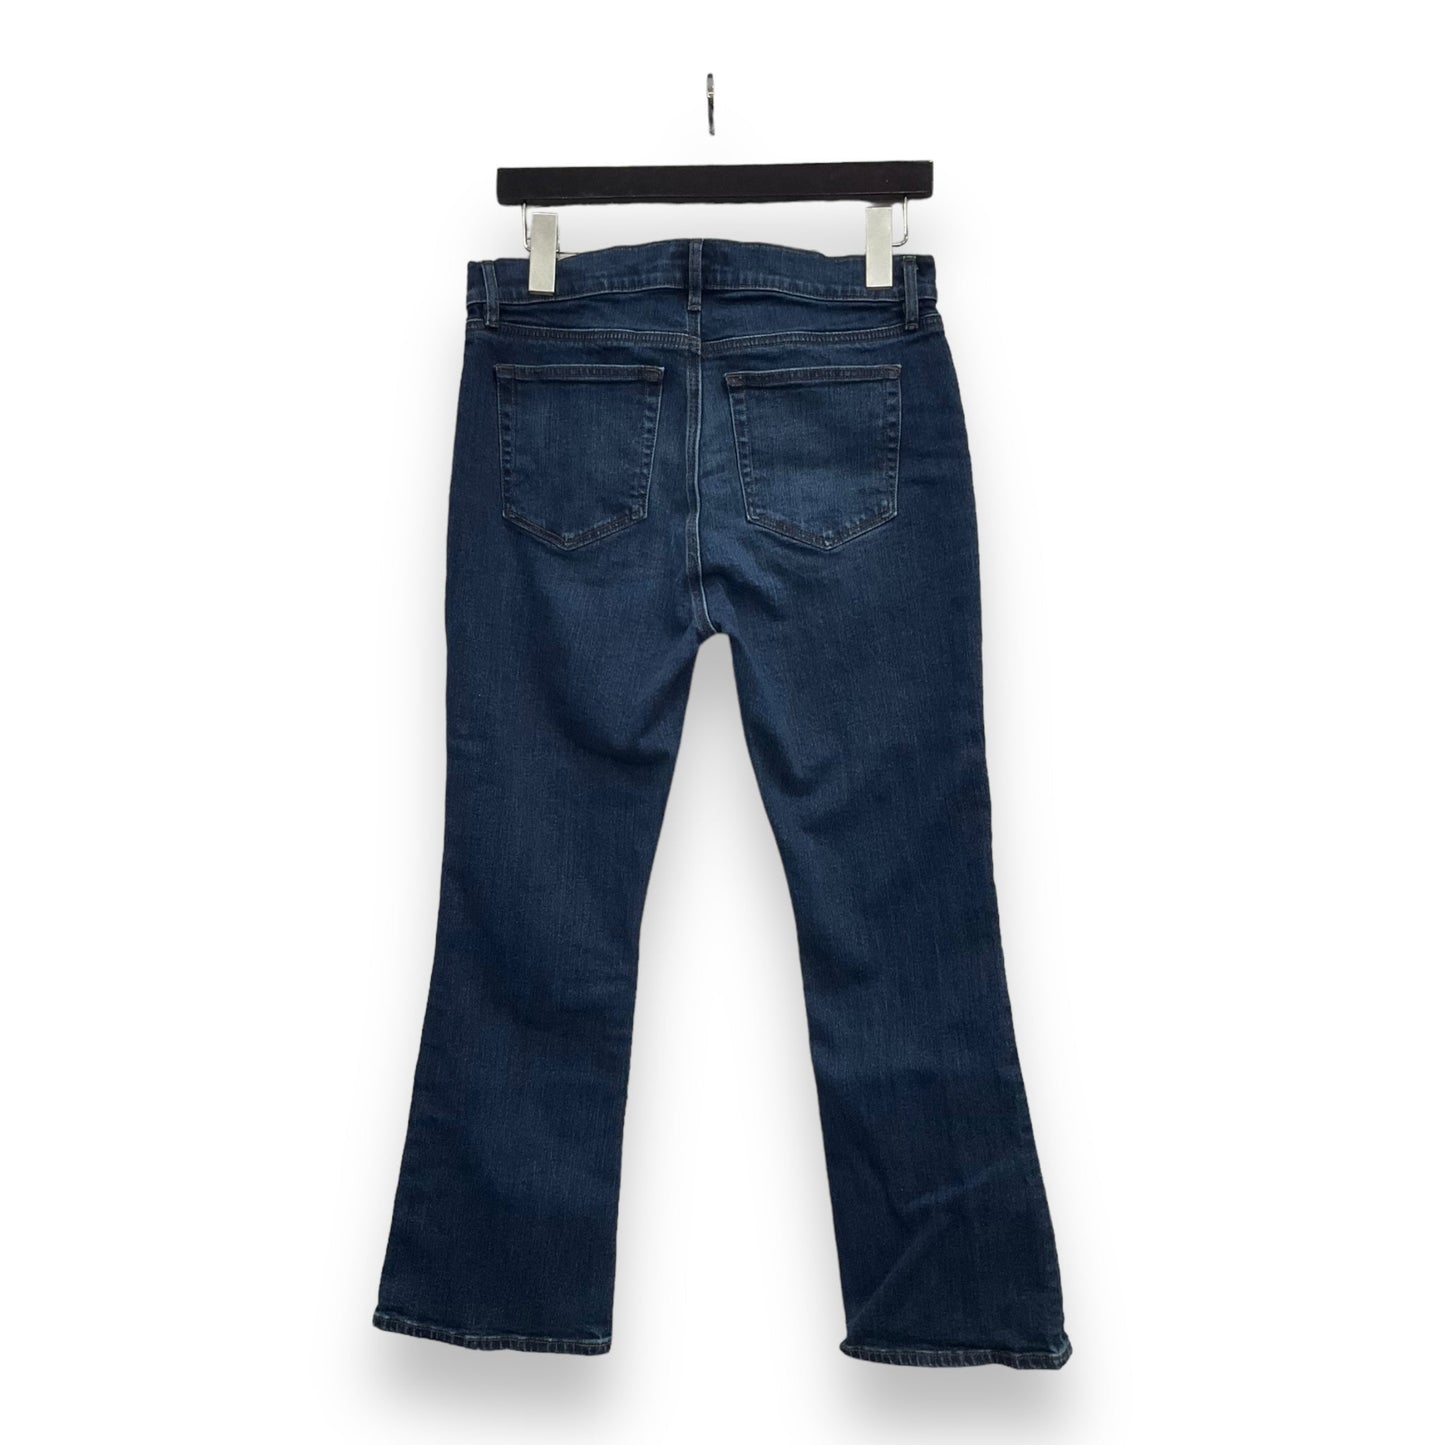 Jeans Boot Cut By Loft  Size: 4